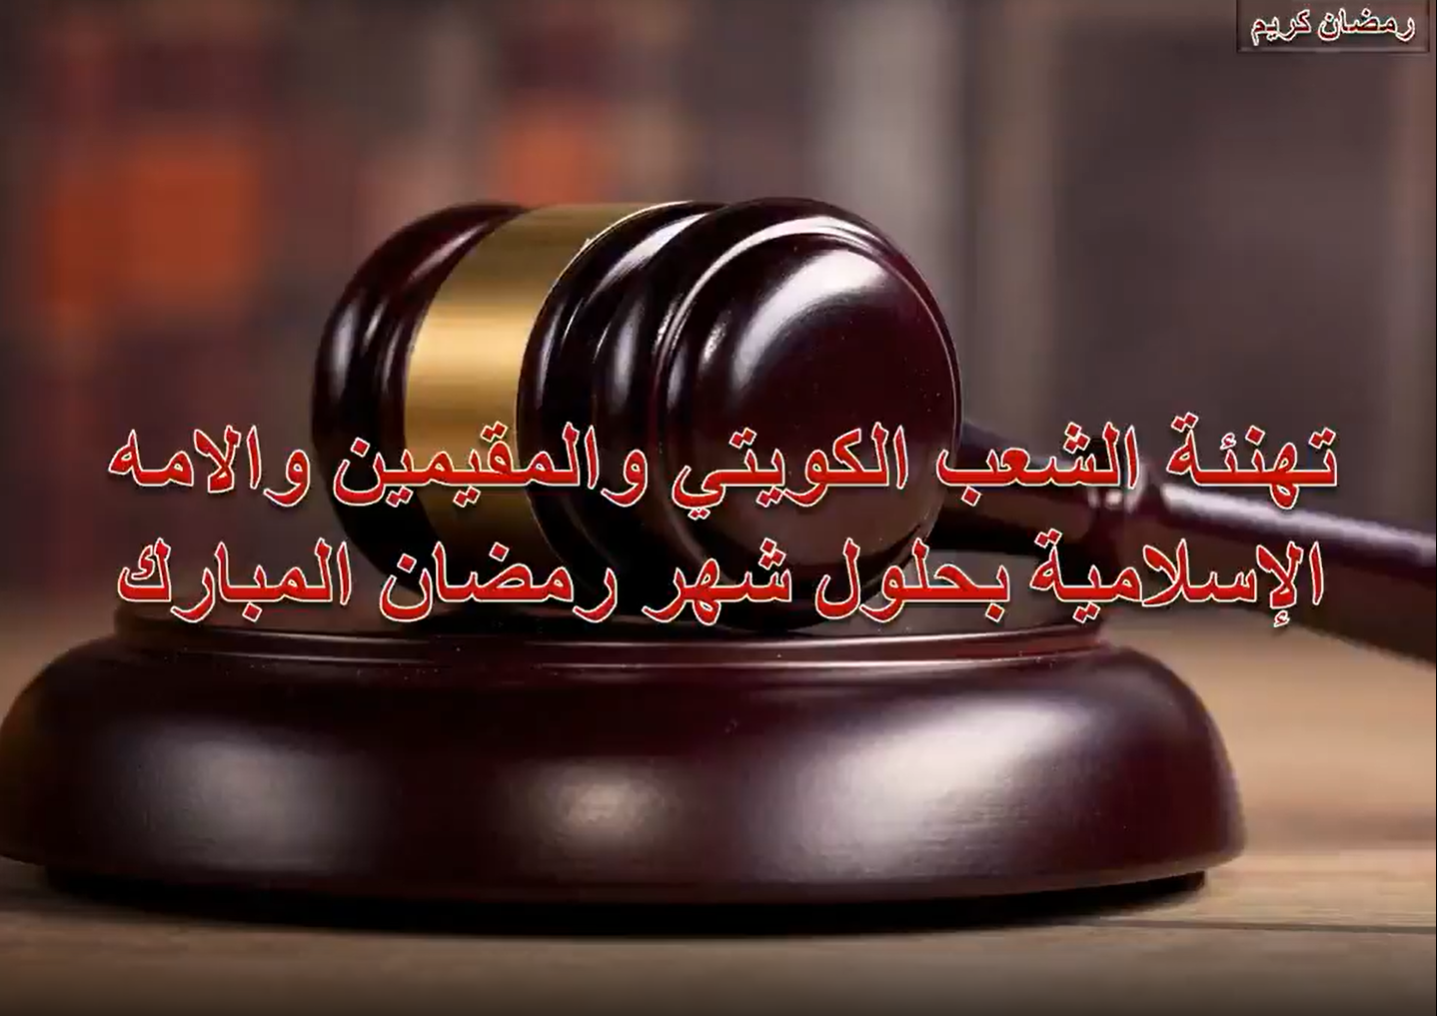 The office of the lawyer Sheikha Fawzia Al-Sabah￼